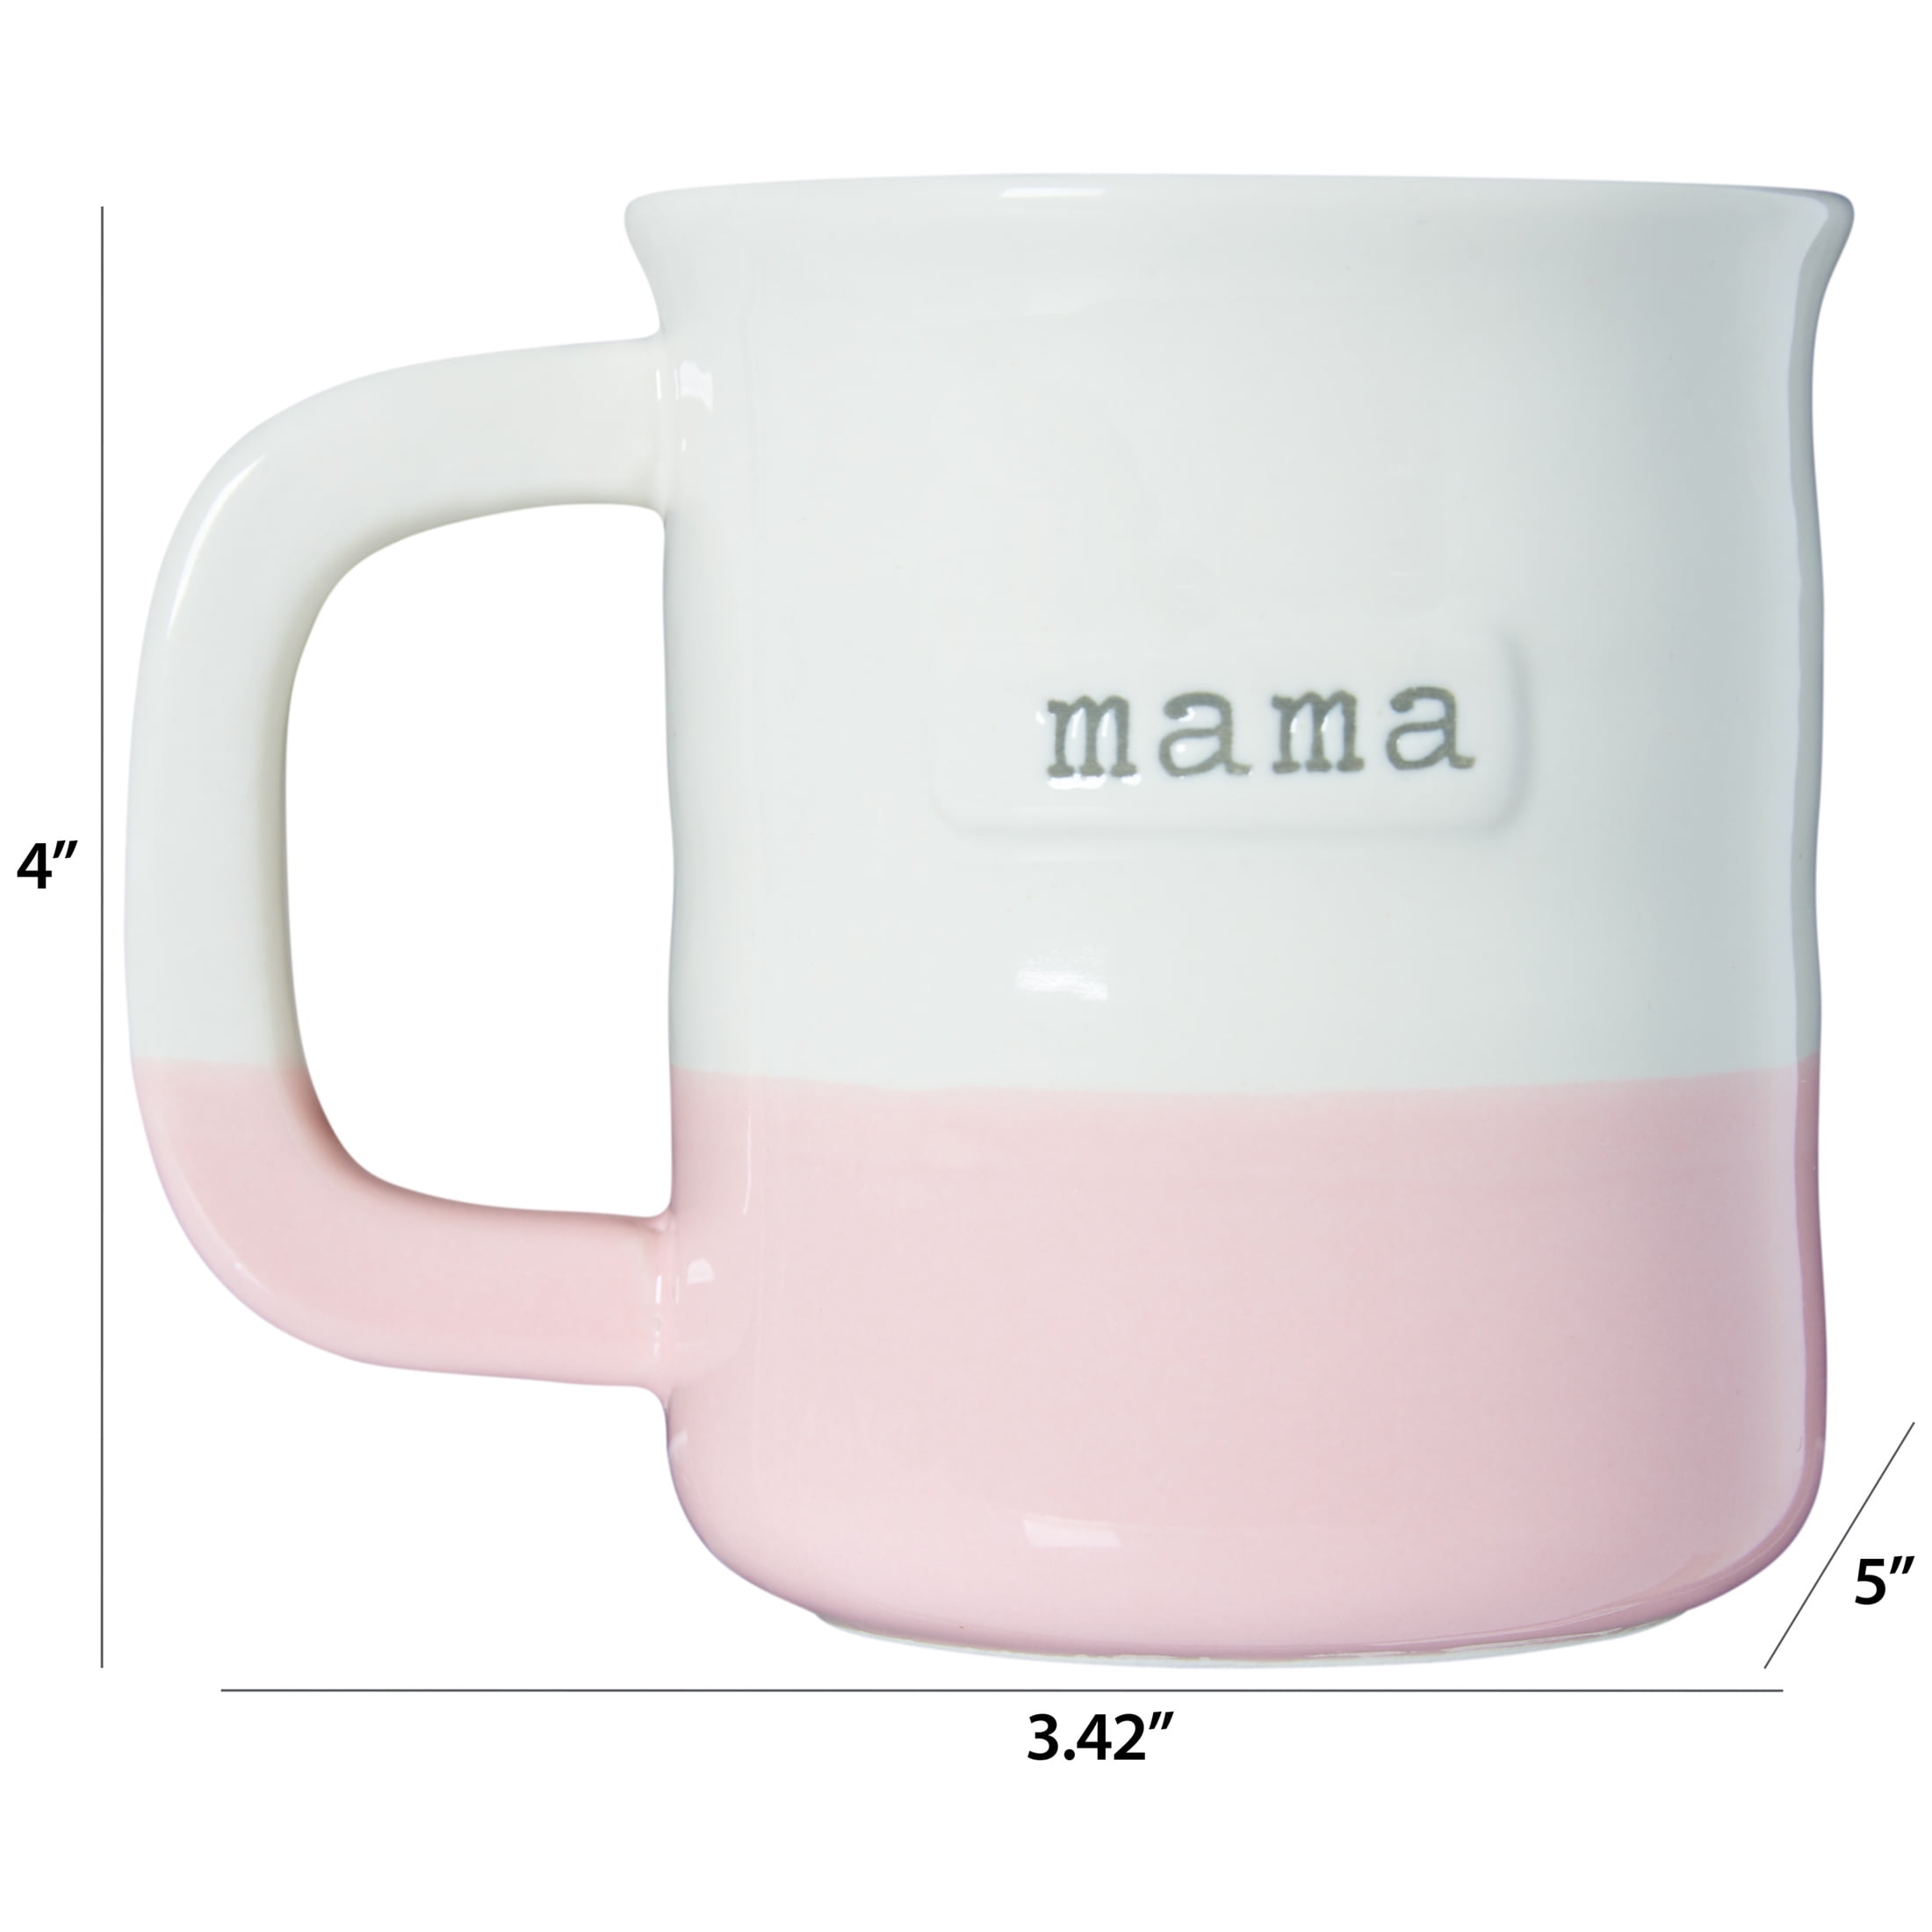 Boy Mom Everyday 11 Ounce Ceramic Mug  Mommy Mama Life Mother's Day M –  Designs by Prim